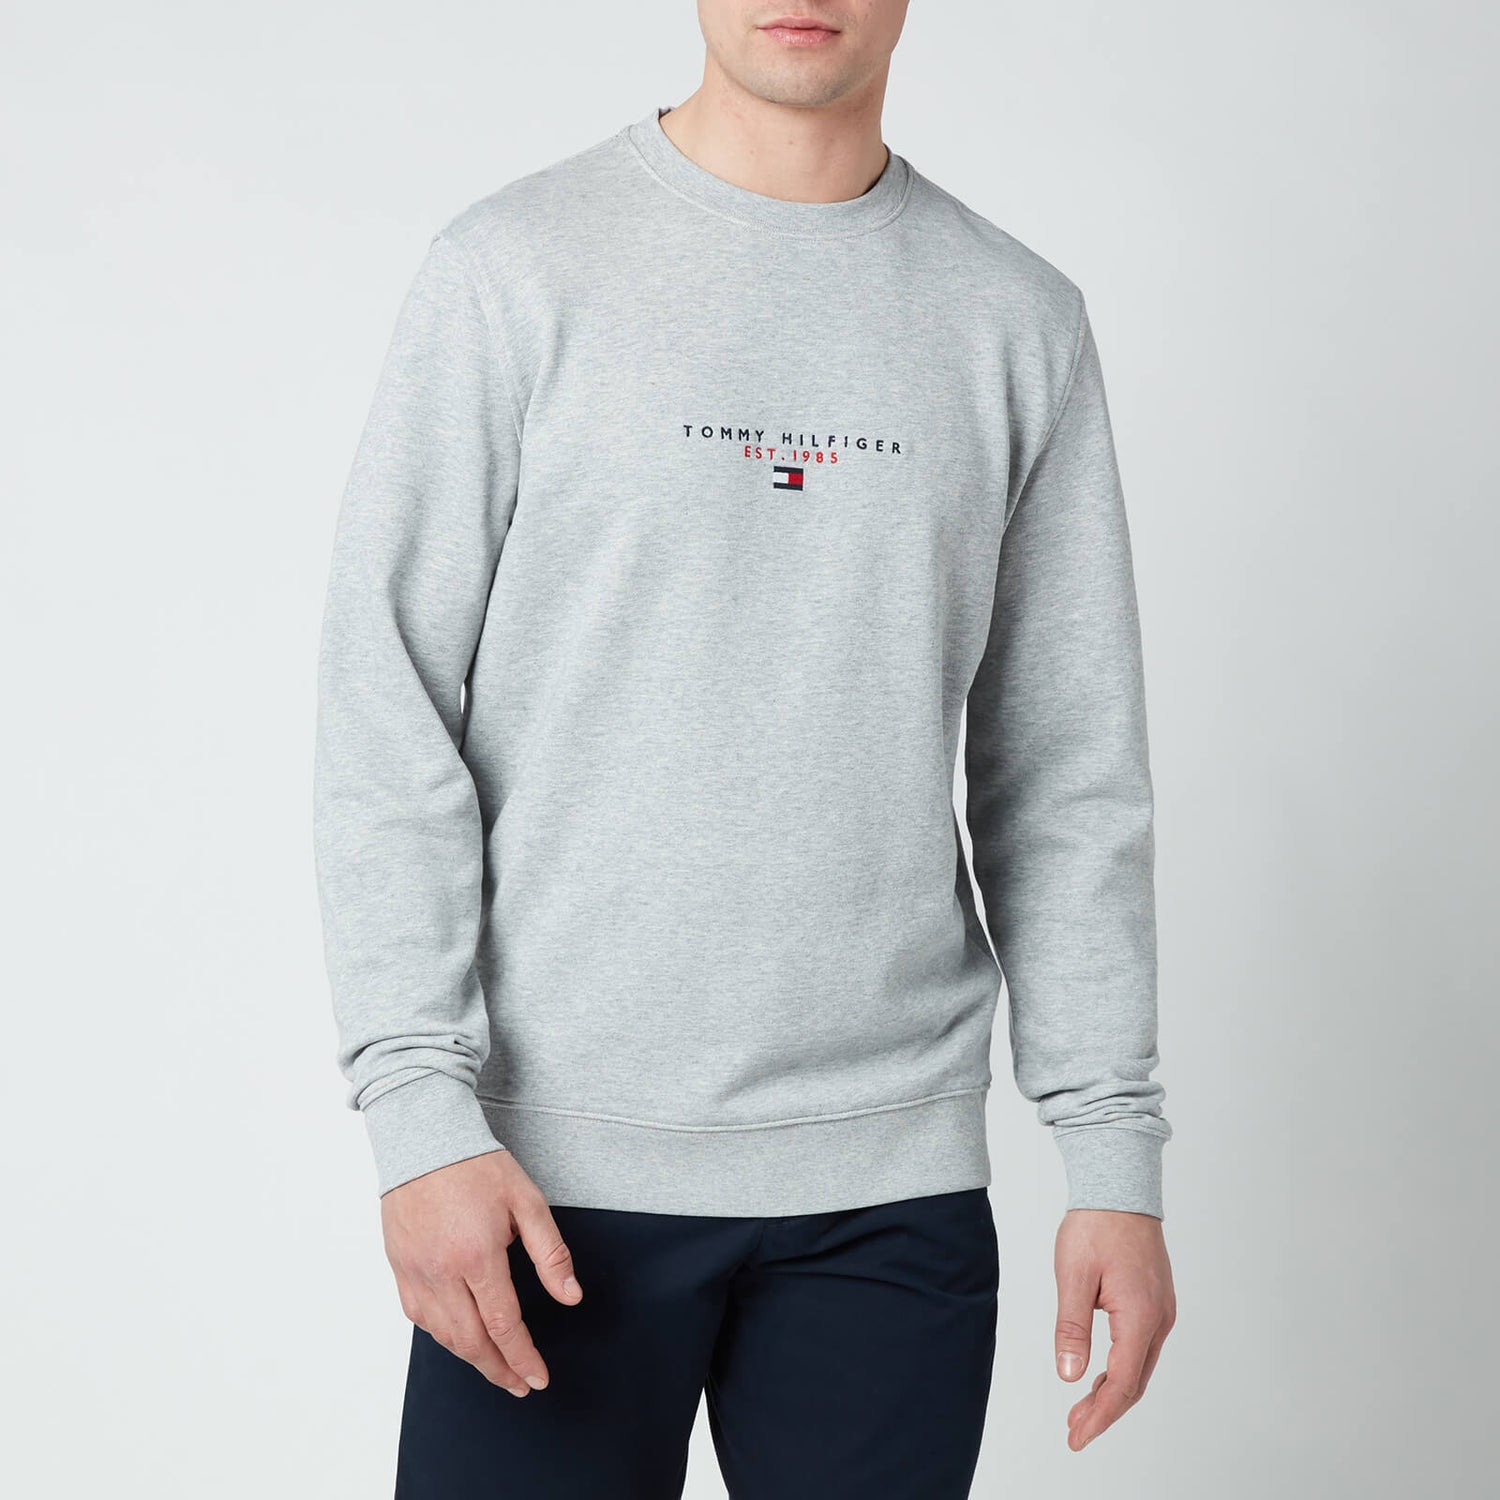 Tommy Hilfiger Men's Essential Crewneck Sweatshirt - Medium Grey Heather